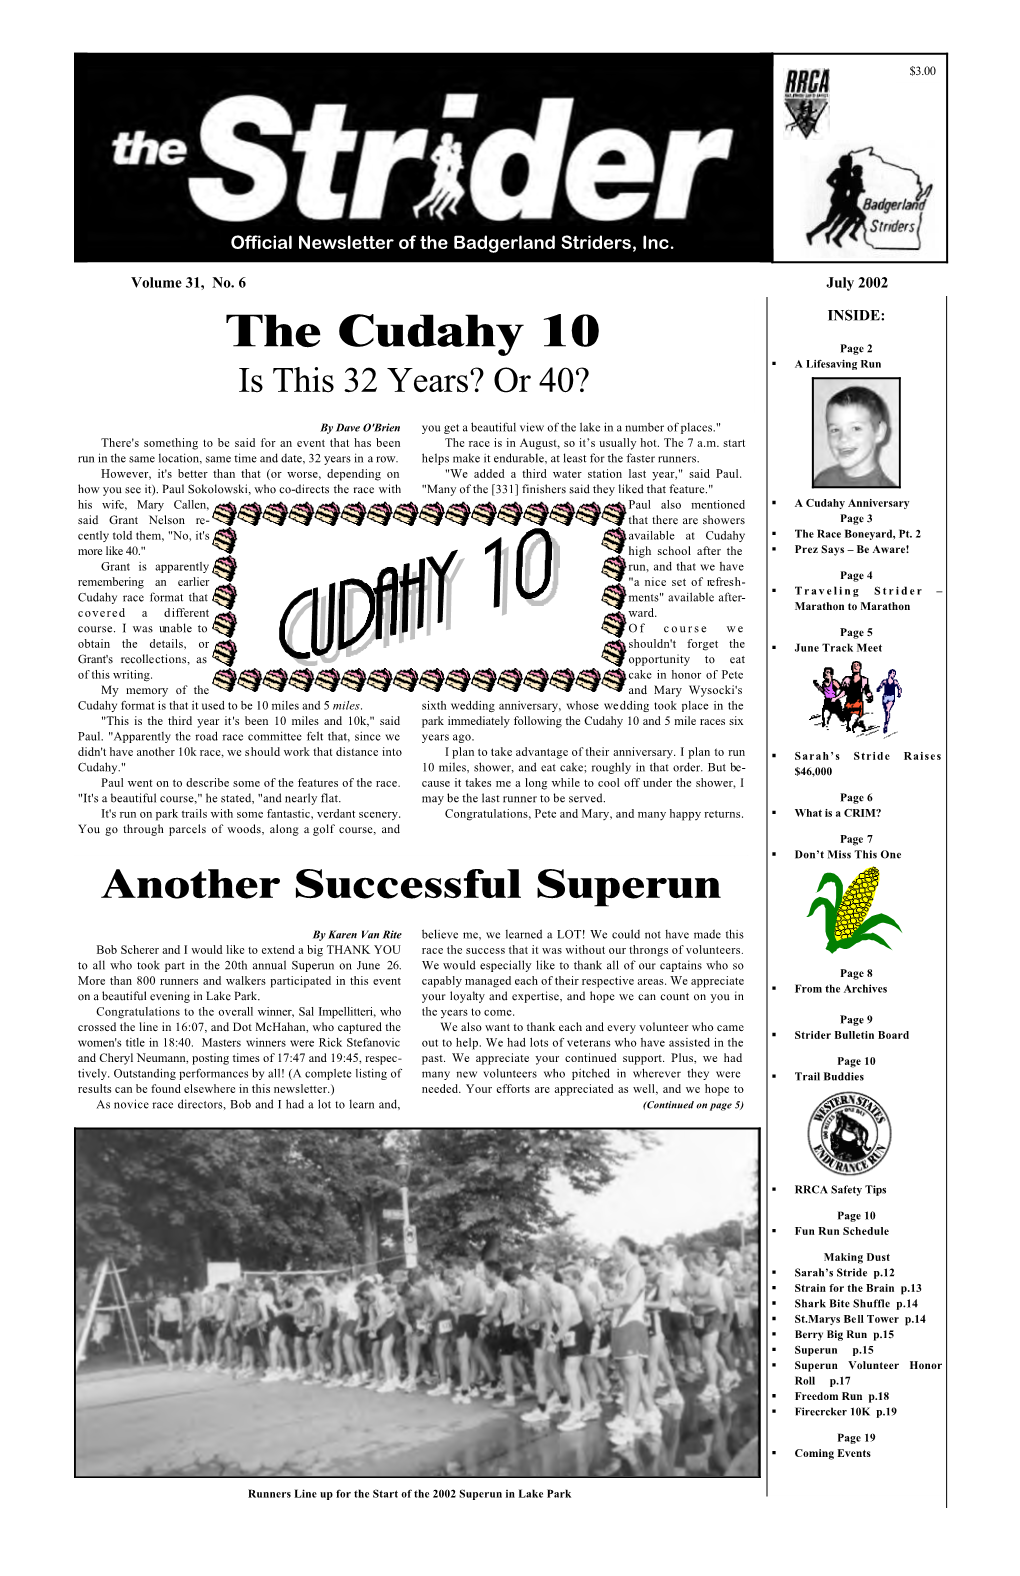 The Cudahy 10 Page 2 § a Lifesaving Run